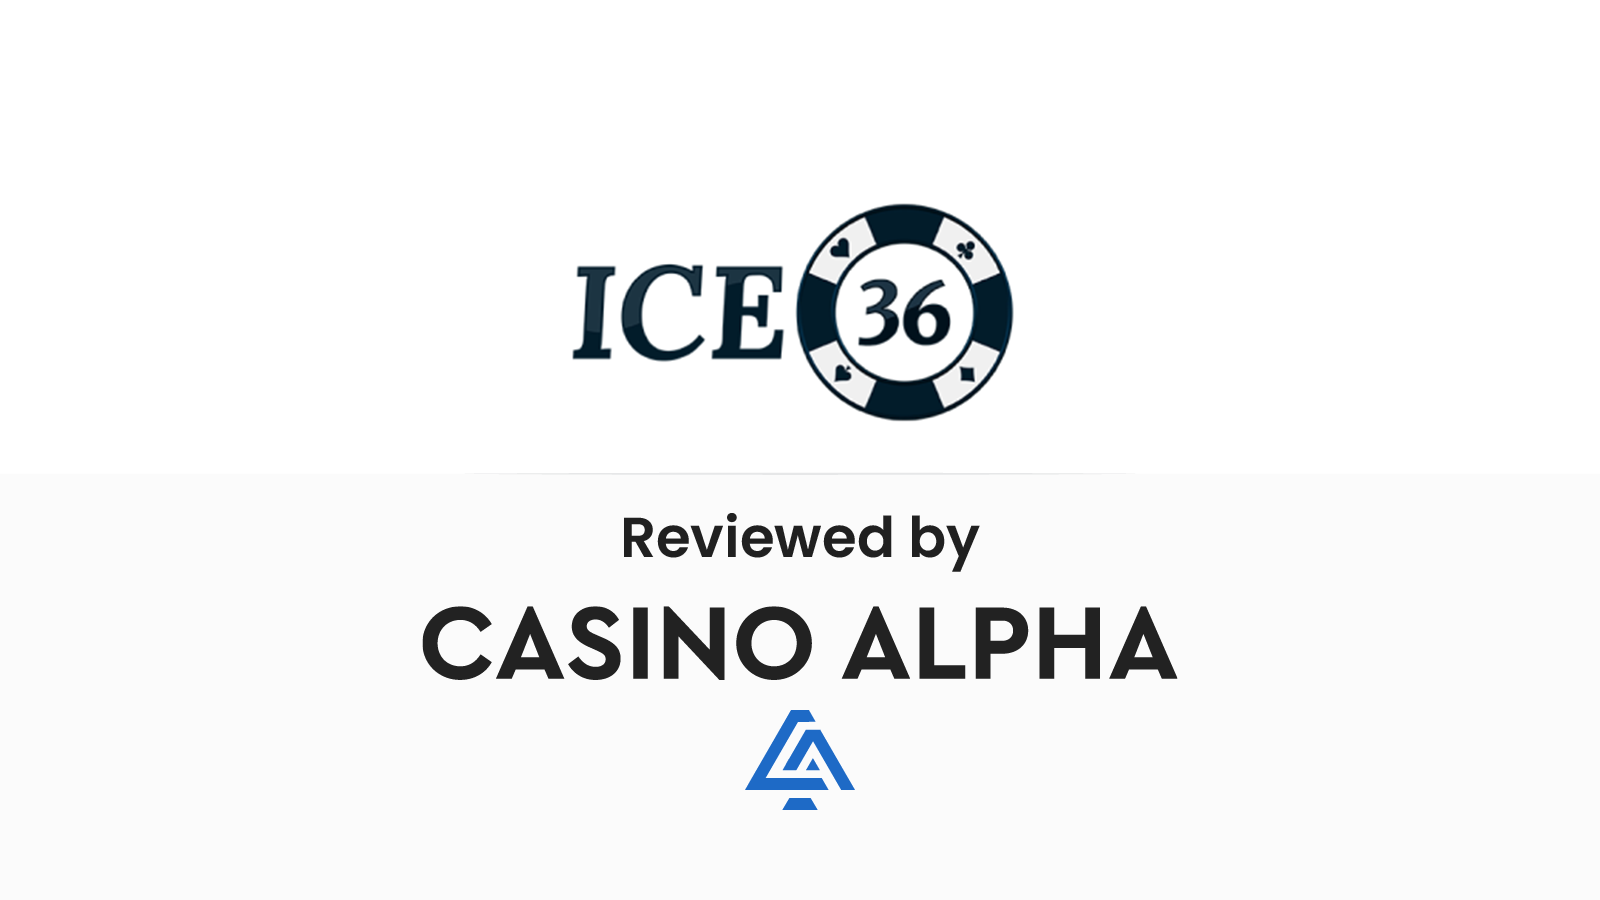 ICE36 Casino Review & Bonus codes